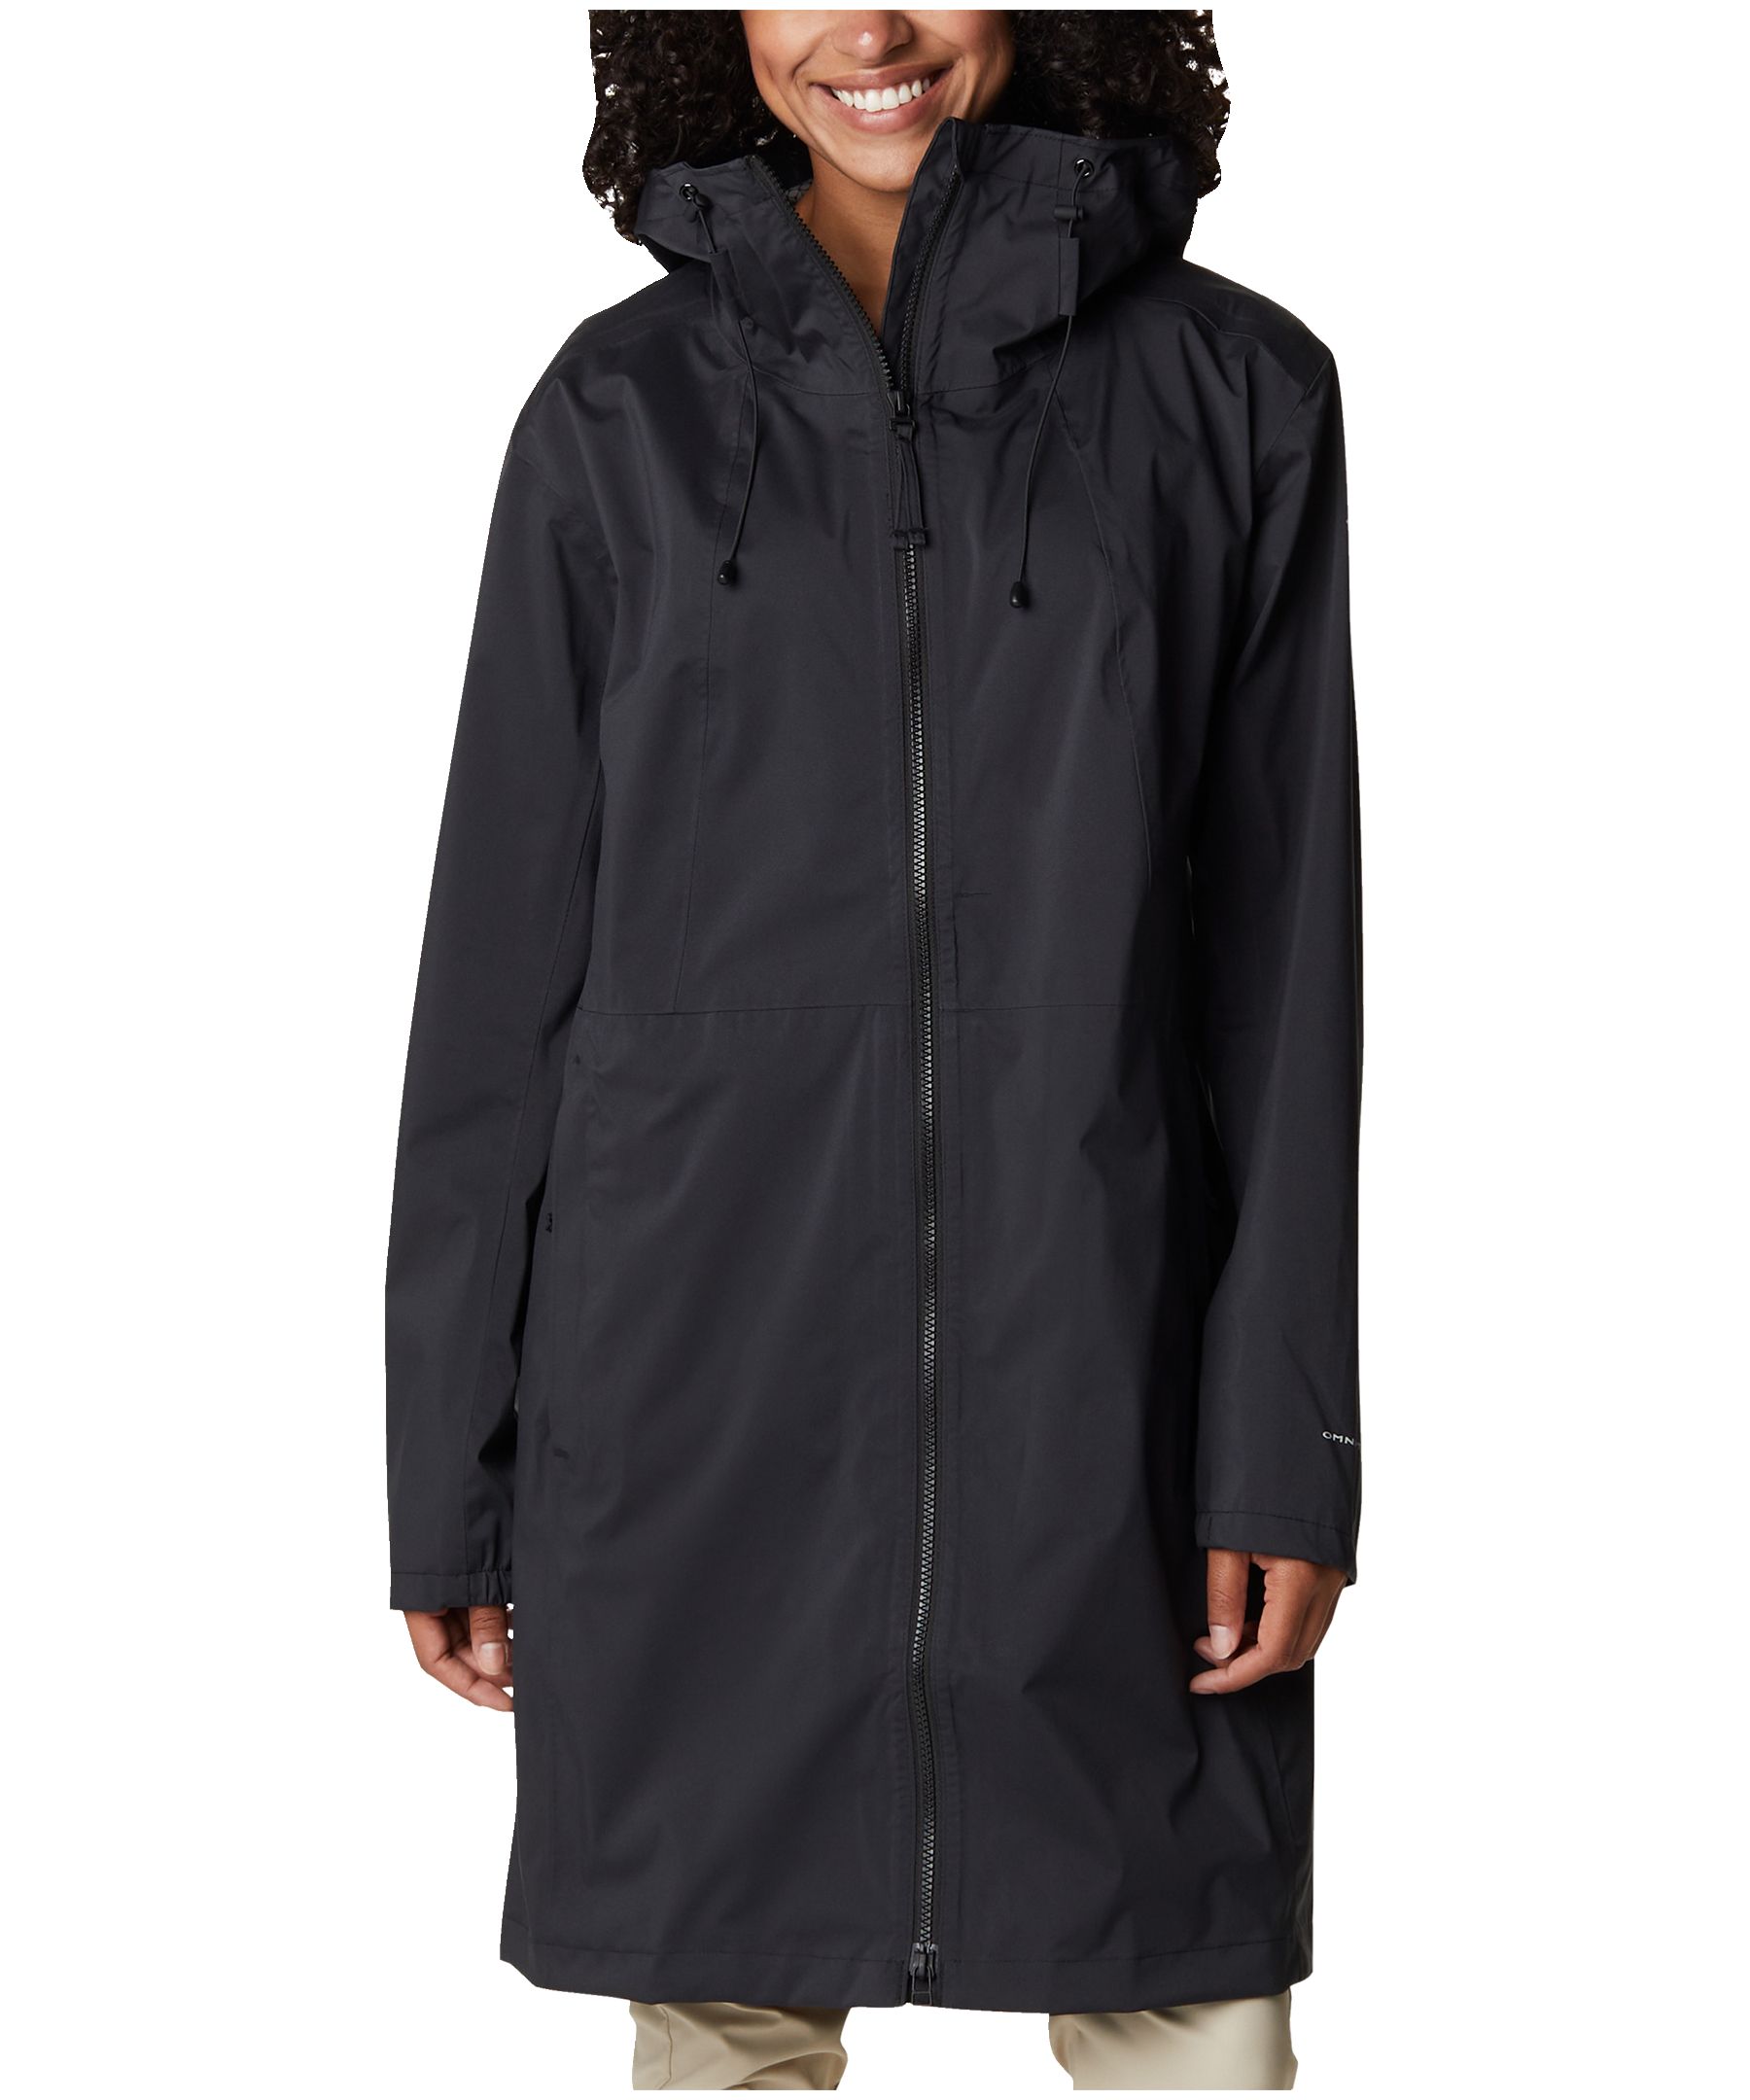 Columbia Men's Firwood Waterproof Insulated Jacket - 716273, Jackets, Coats  & Rain Gear at Sportsman's Guide